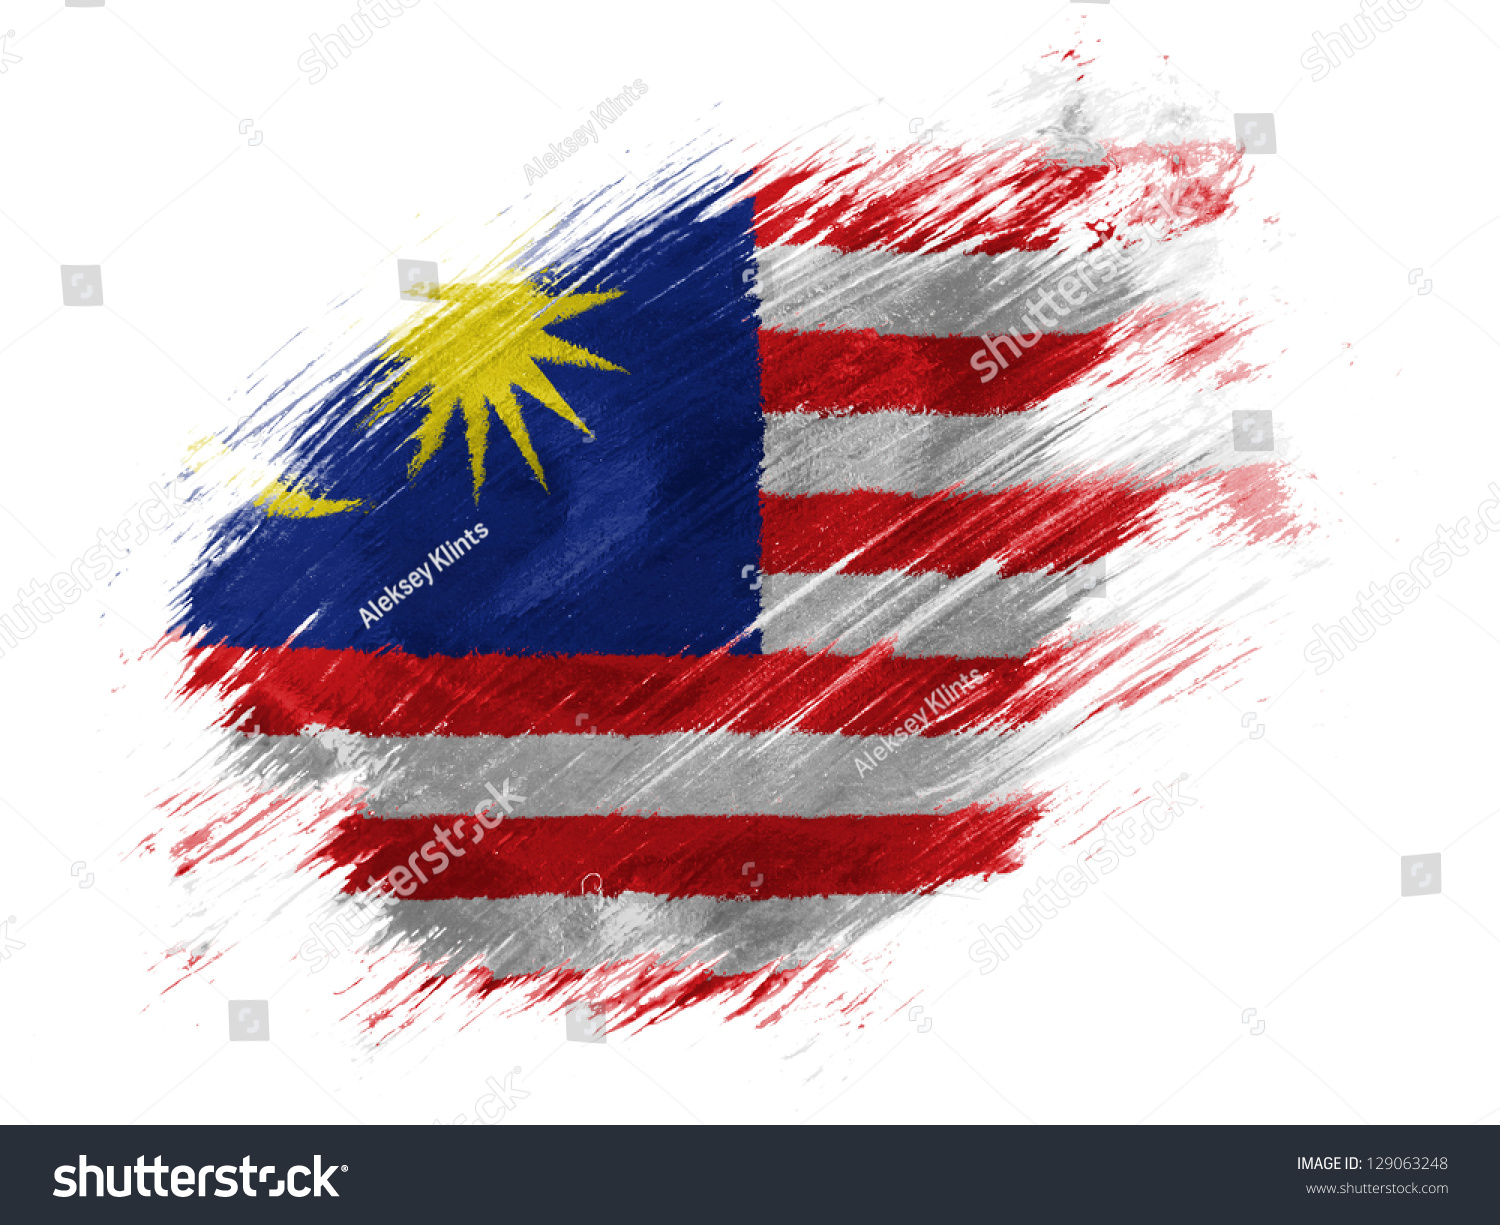 The Malaysia Flag Painted With Brush On White Royalty Free Stock Photo 129063248 Avopix Com